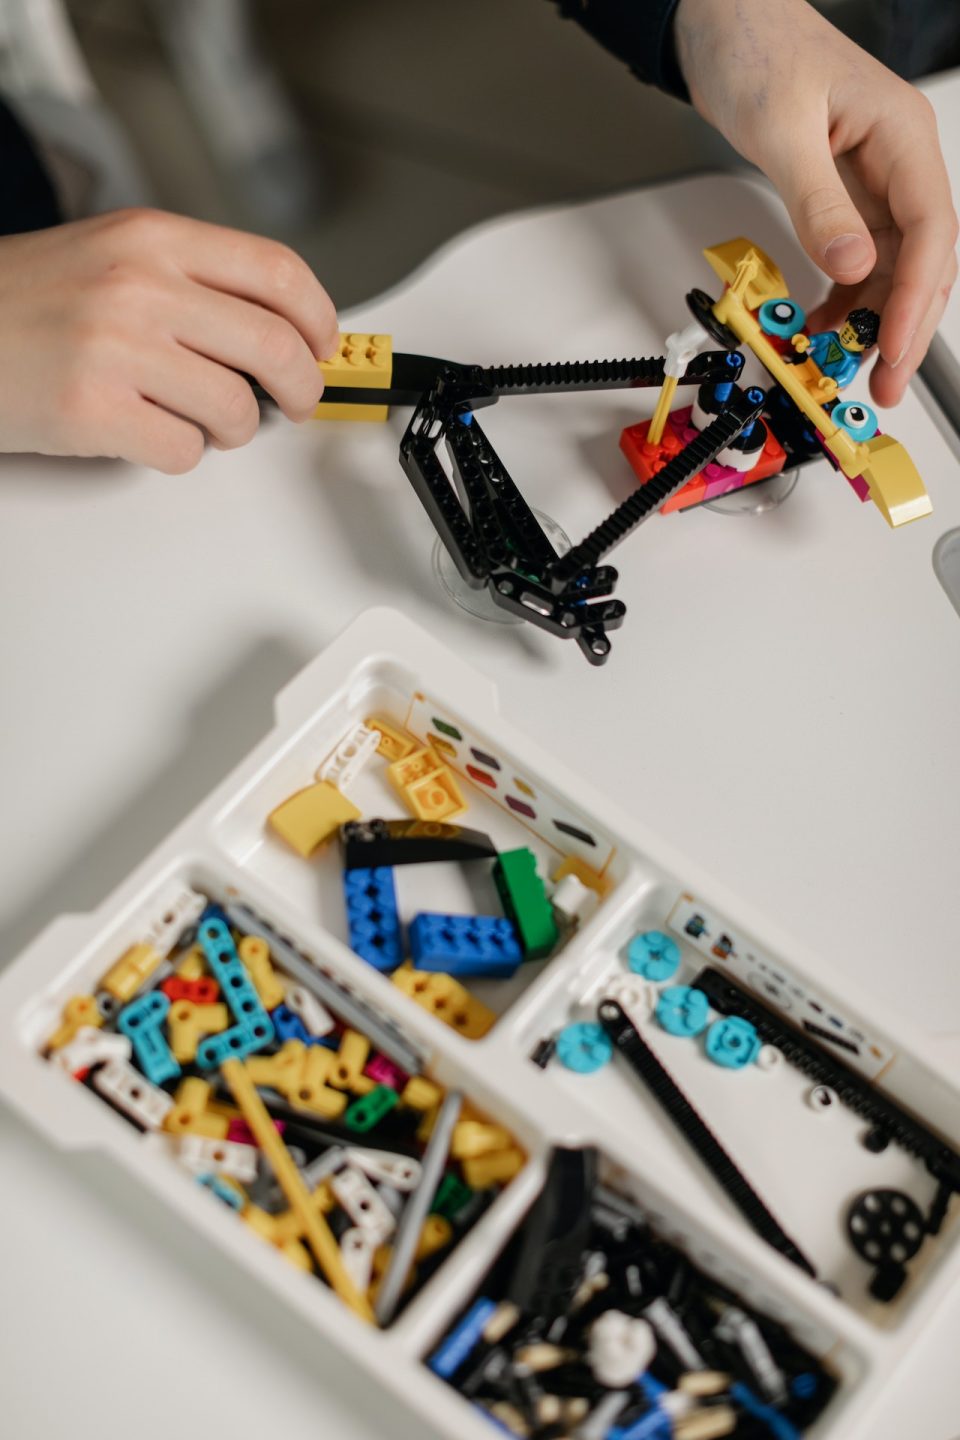 Lego and oil-based plastics